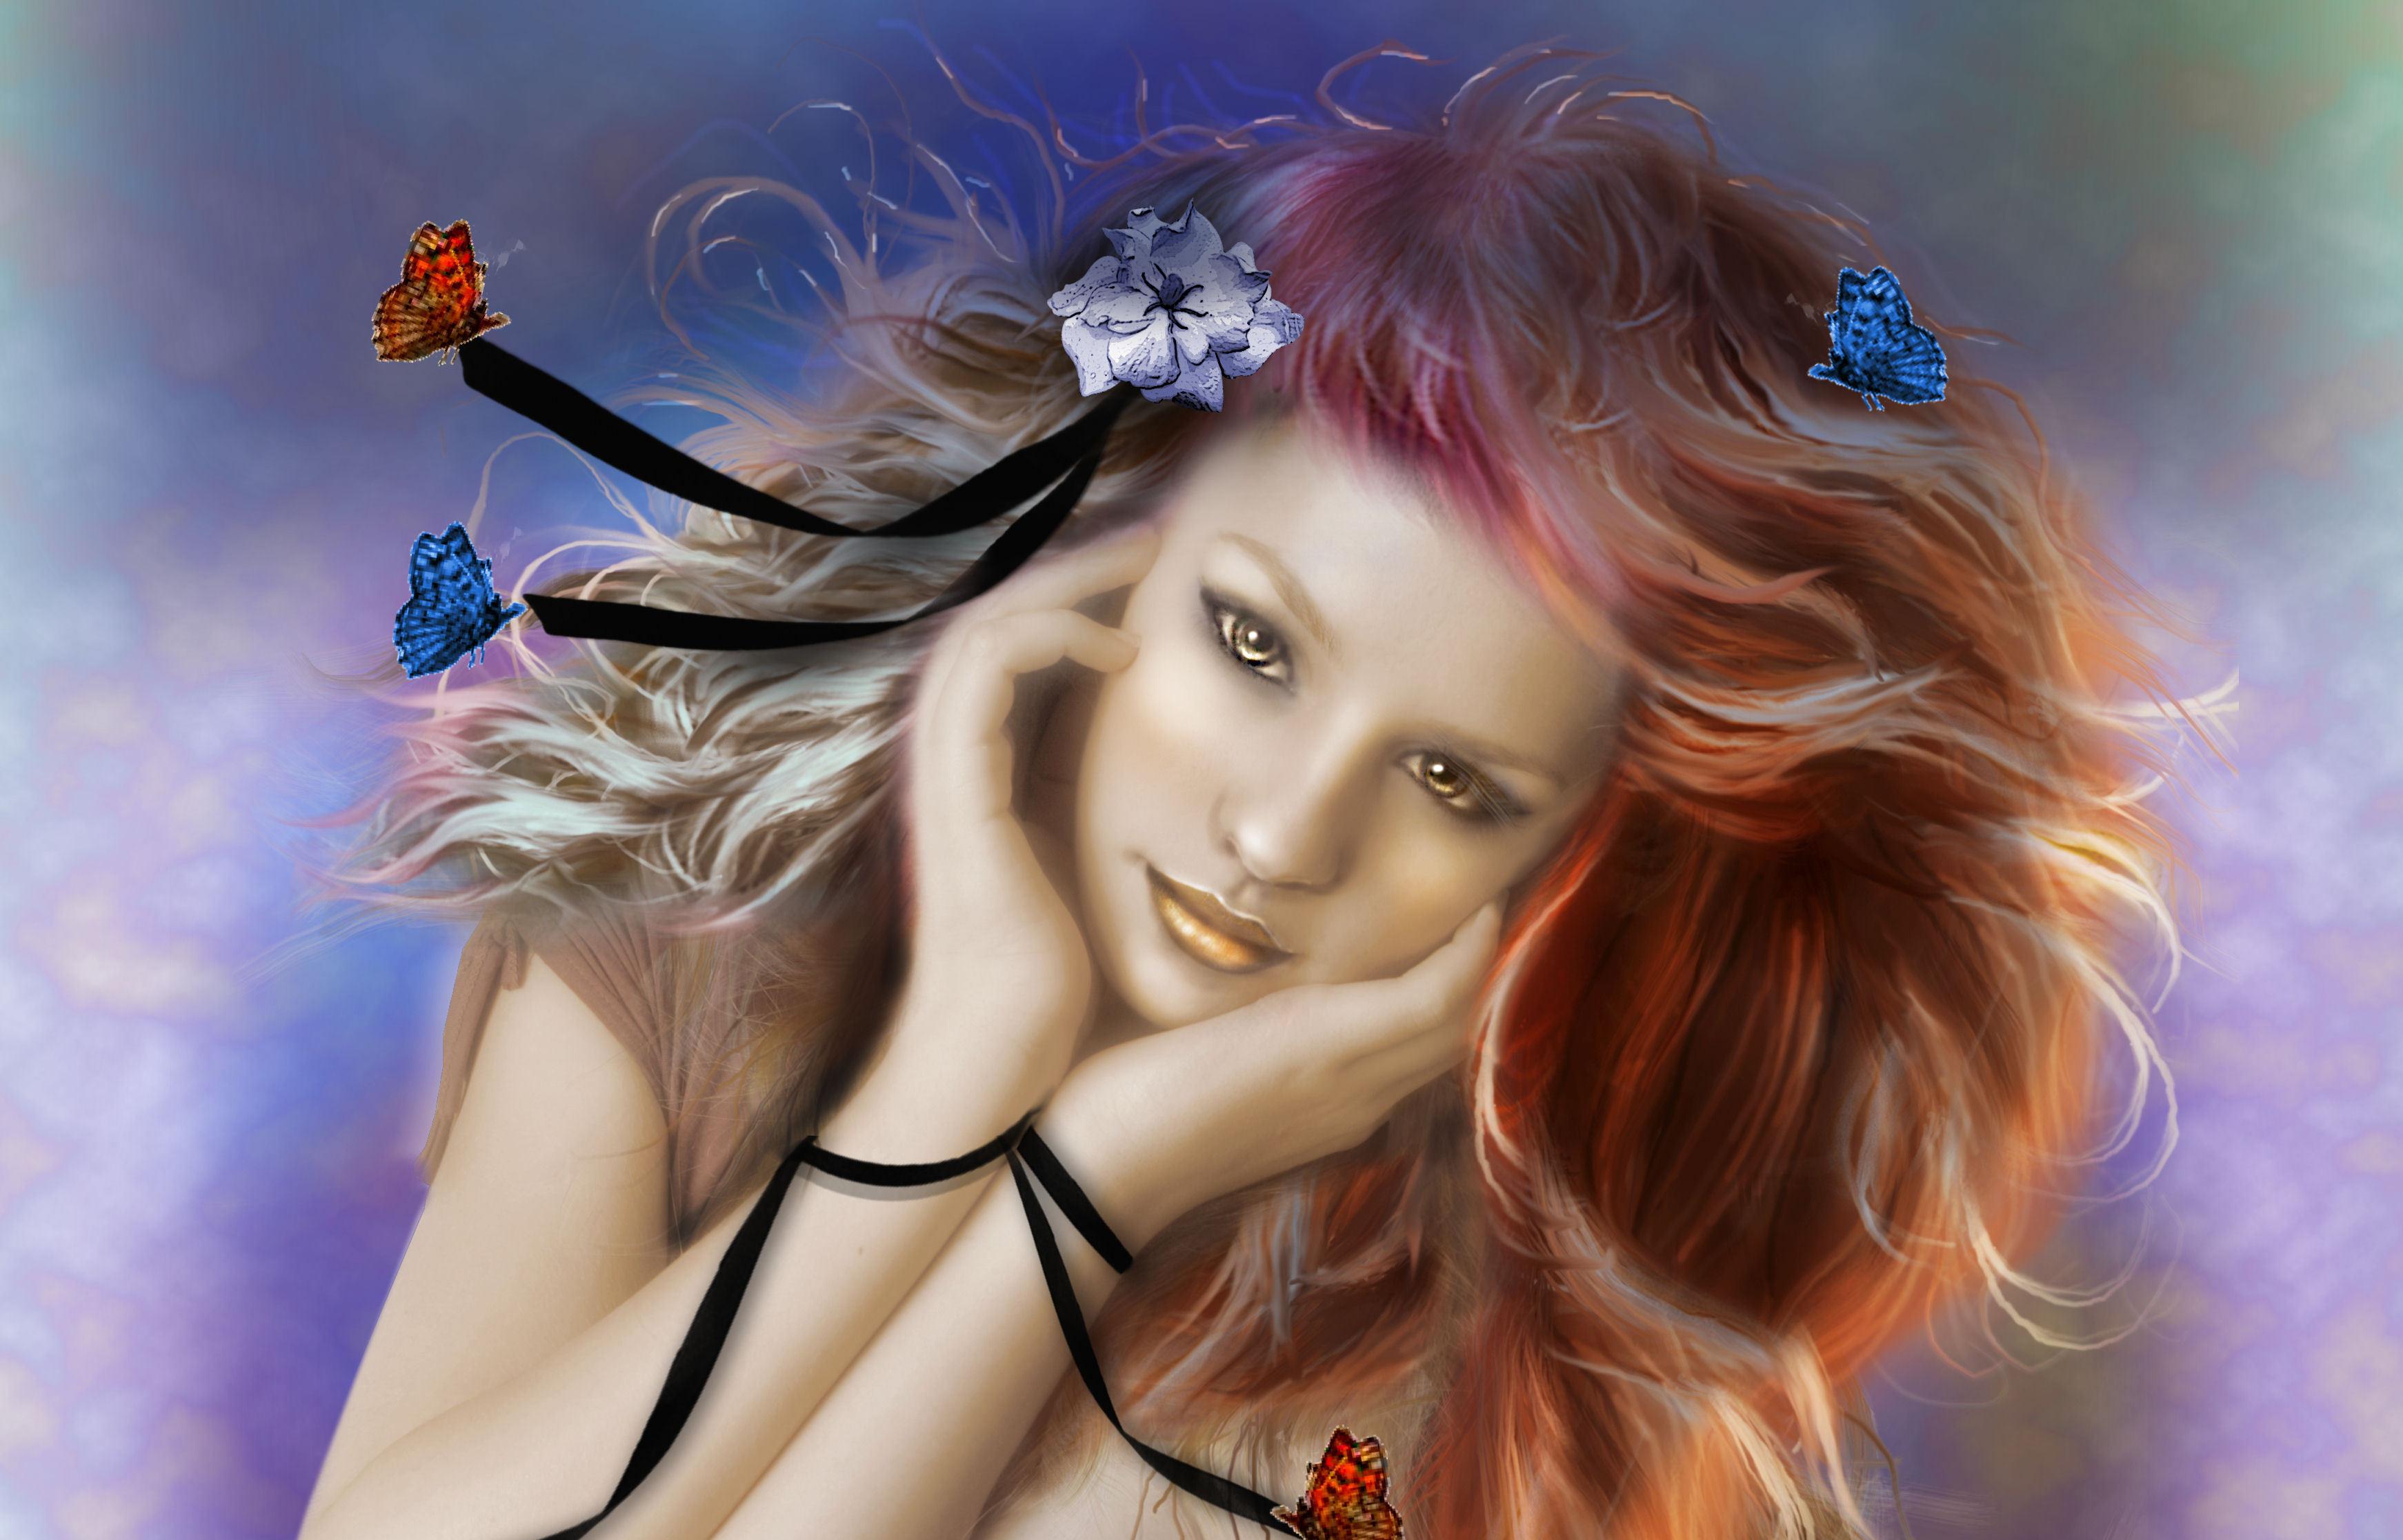 painting, Art, Girl, Eyes, Face, Hair, Butterflies, Arms